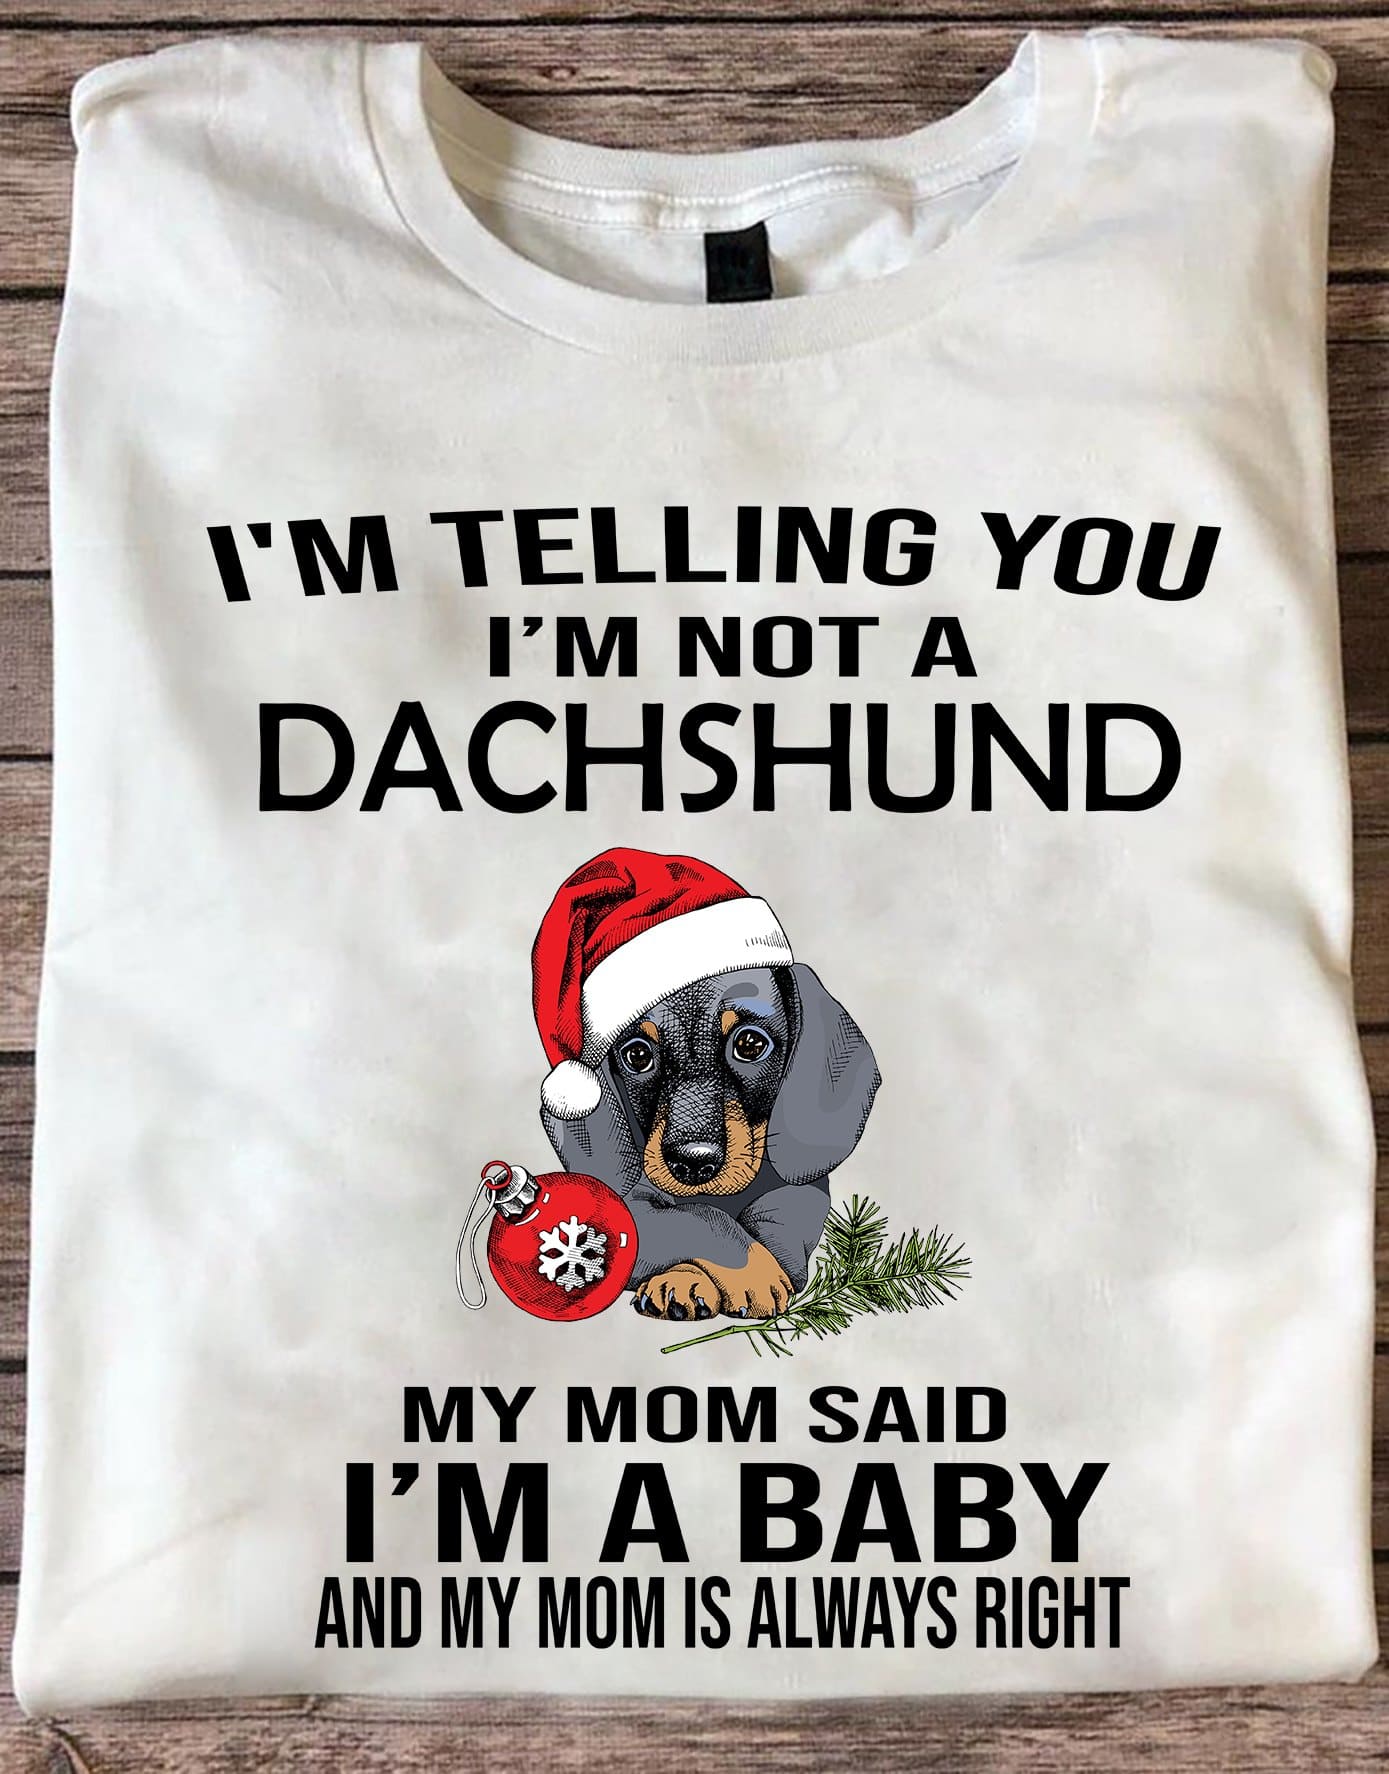 I'm telling you I'm a Dachshund my mom said I'm a baby - Baby Dachshund, Christmas ugly sweater